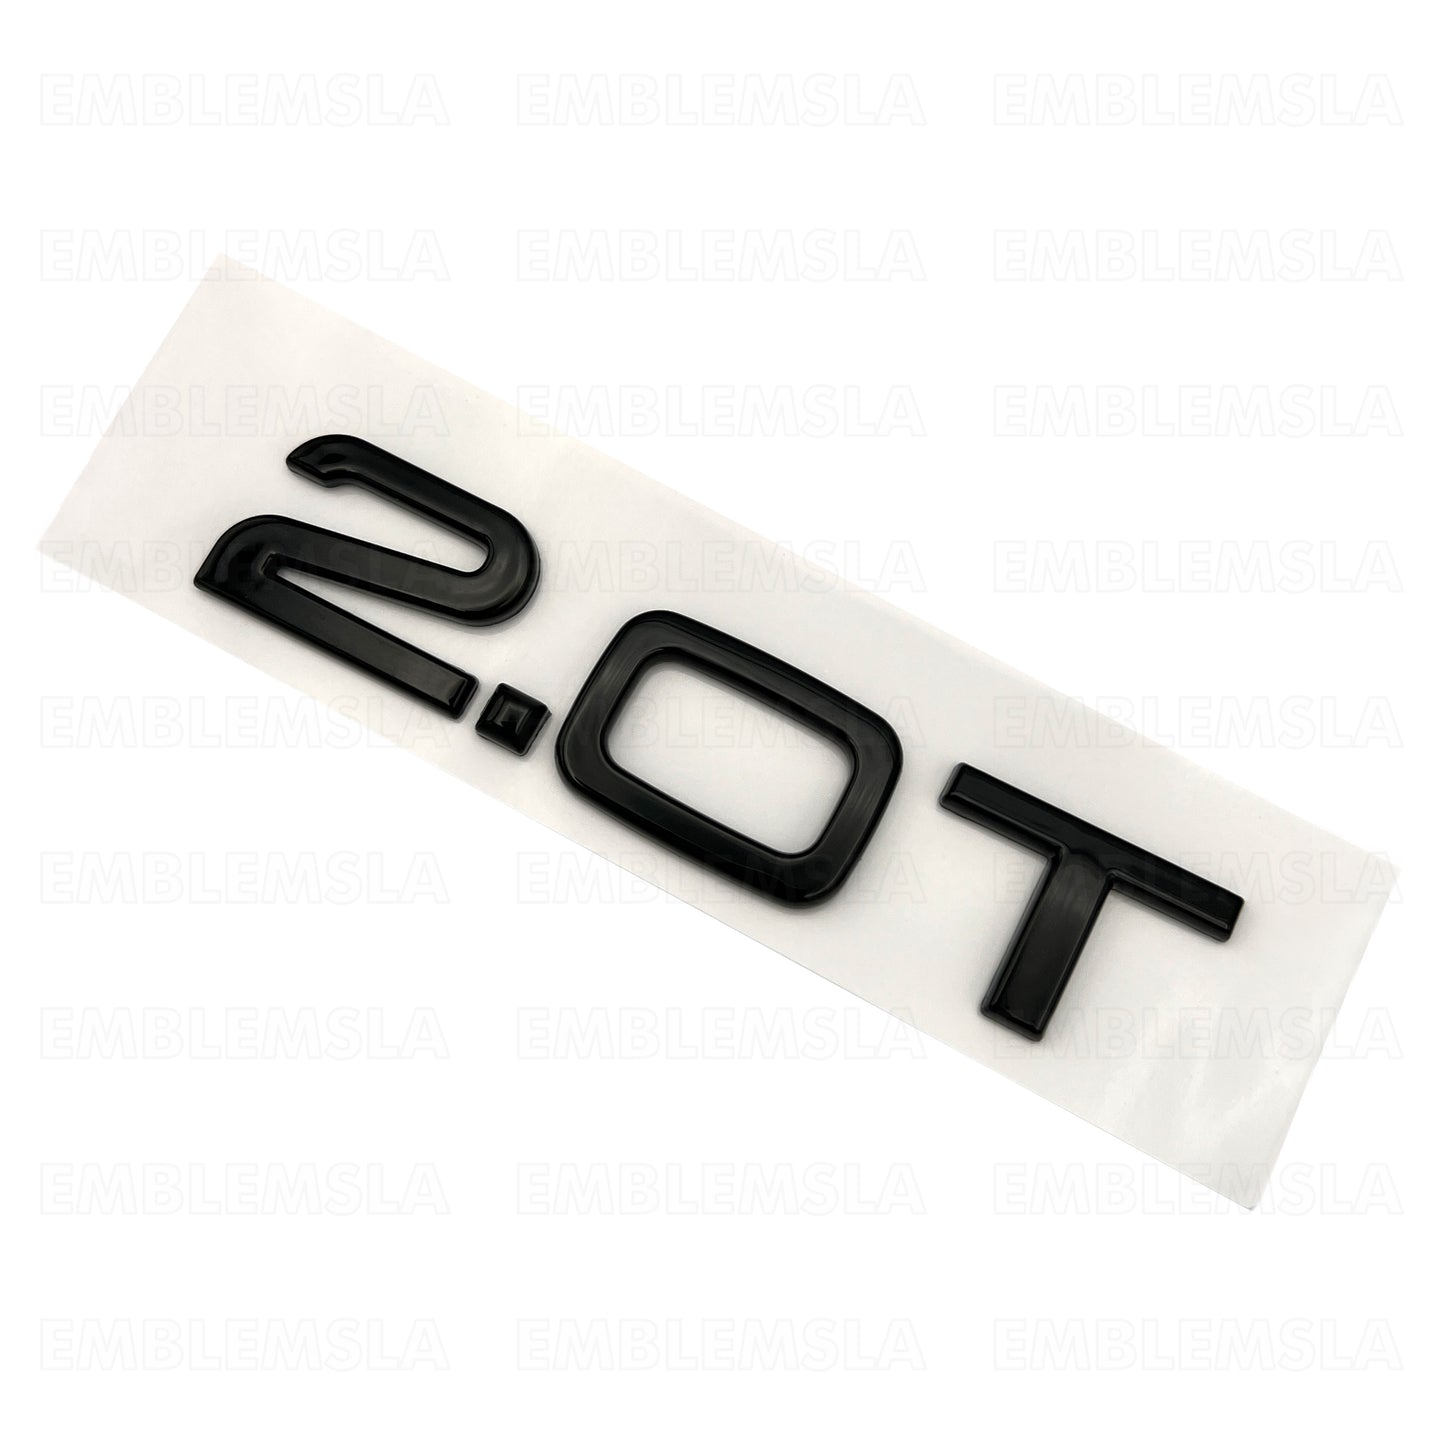 Audi 2.0T Emblem Gloss Black 3D Badge Trunk Nameplate OEM Compact S Line